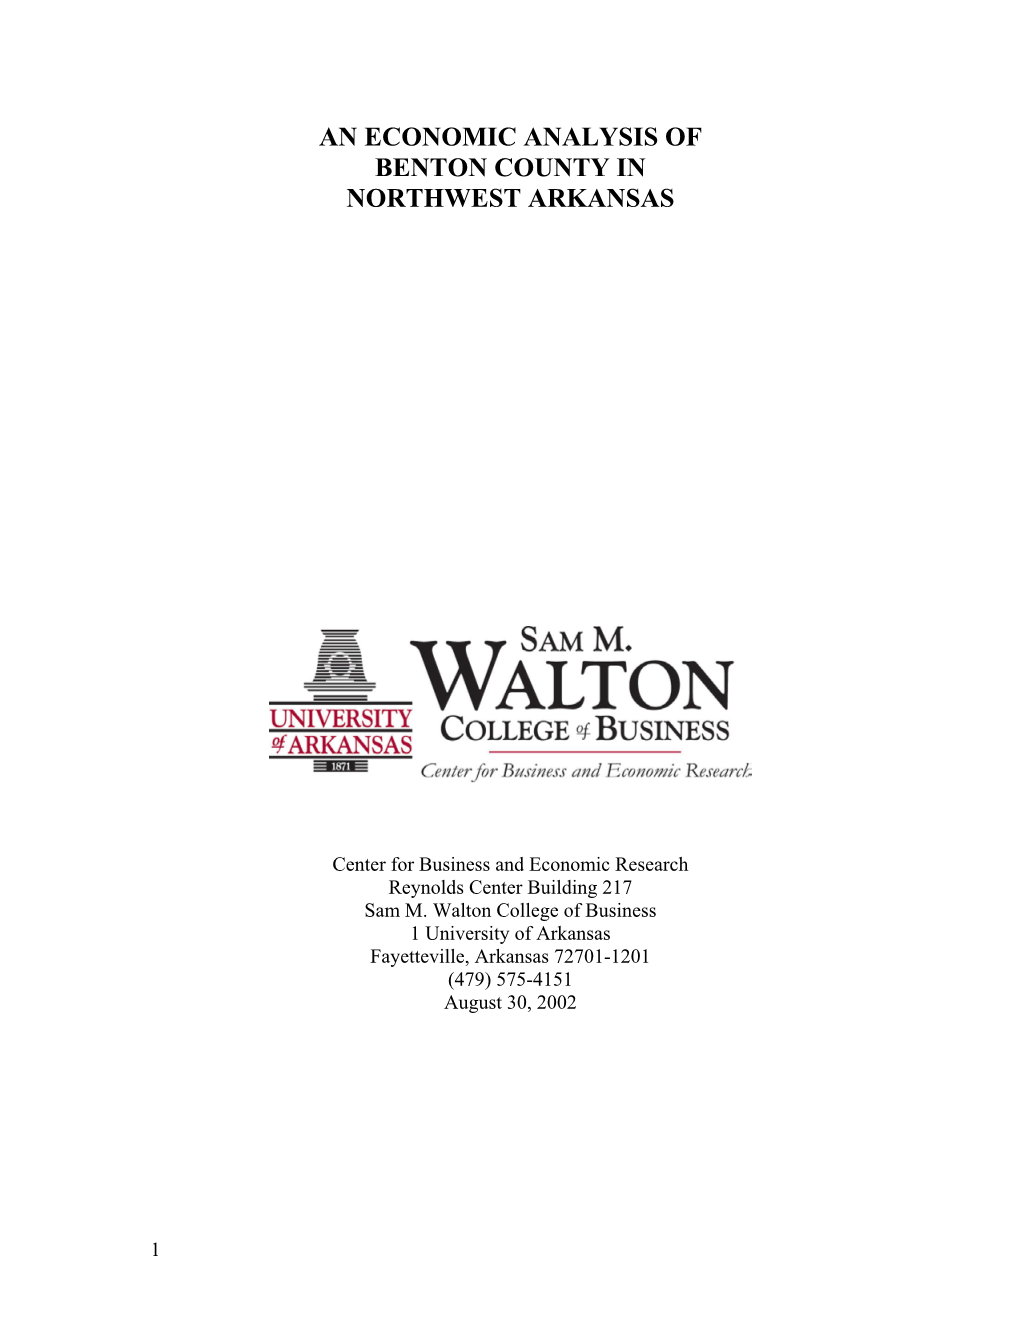 An Economic Analysis of Benton County in Northwest Arkansas